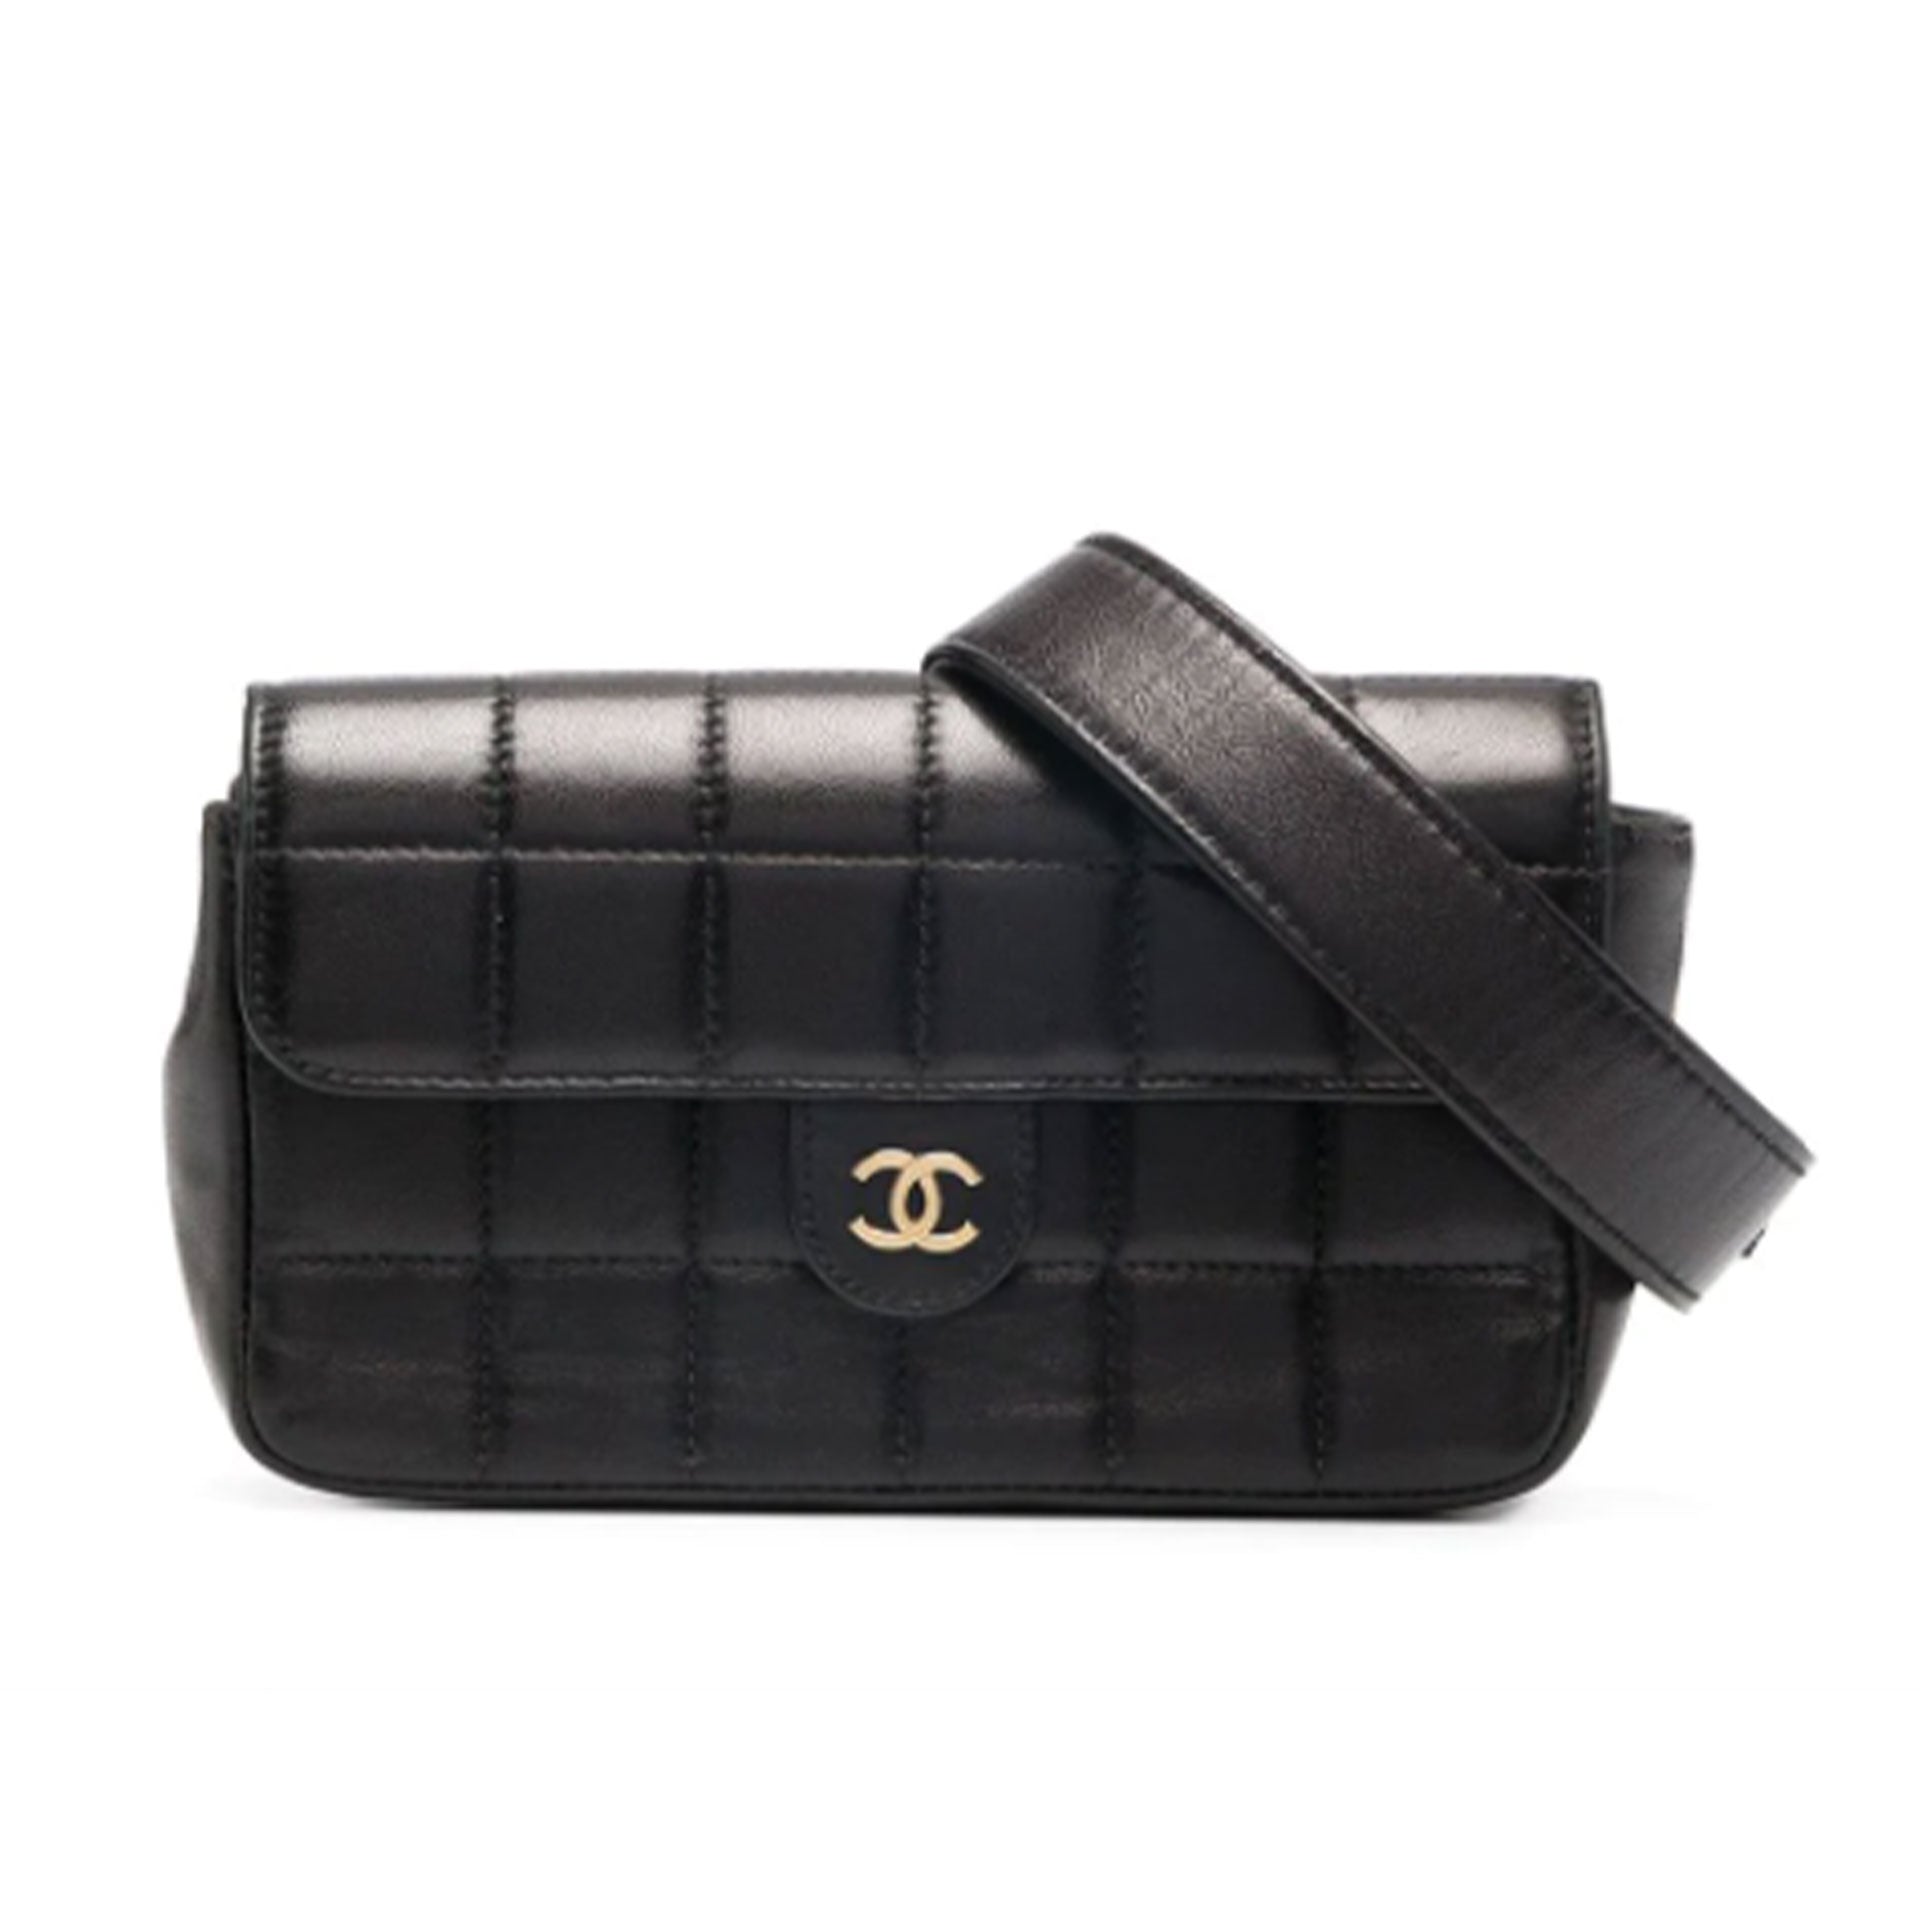 Chanel Black Quilted Lambskin Belt Bag Q6A0011IK8010